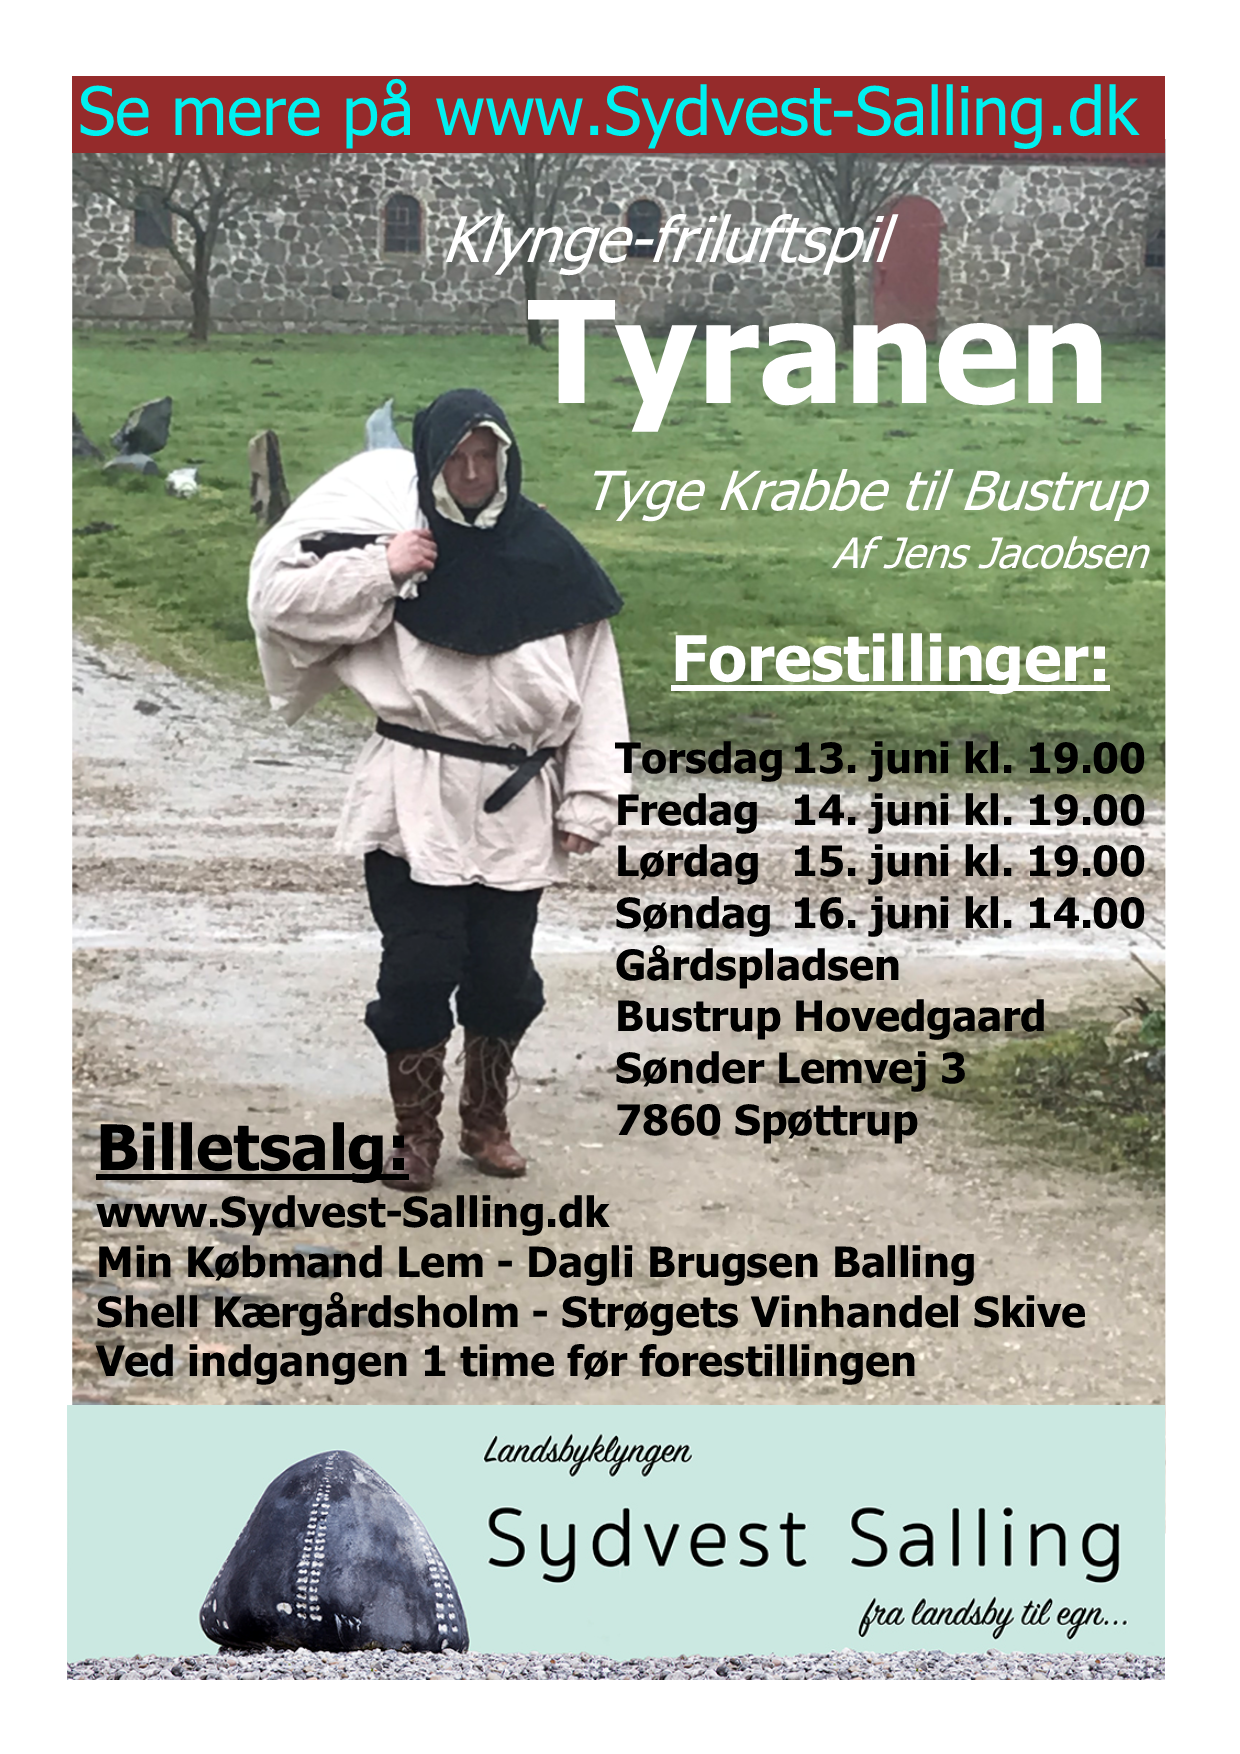 Premiere Klynge-friluftspil Tyranen Tyge Krabbe til Bustrup